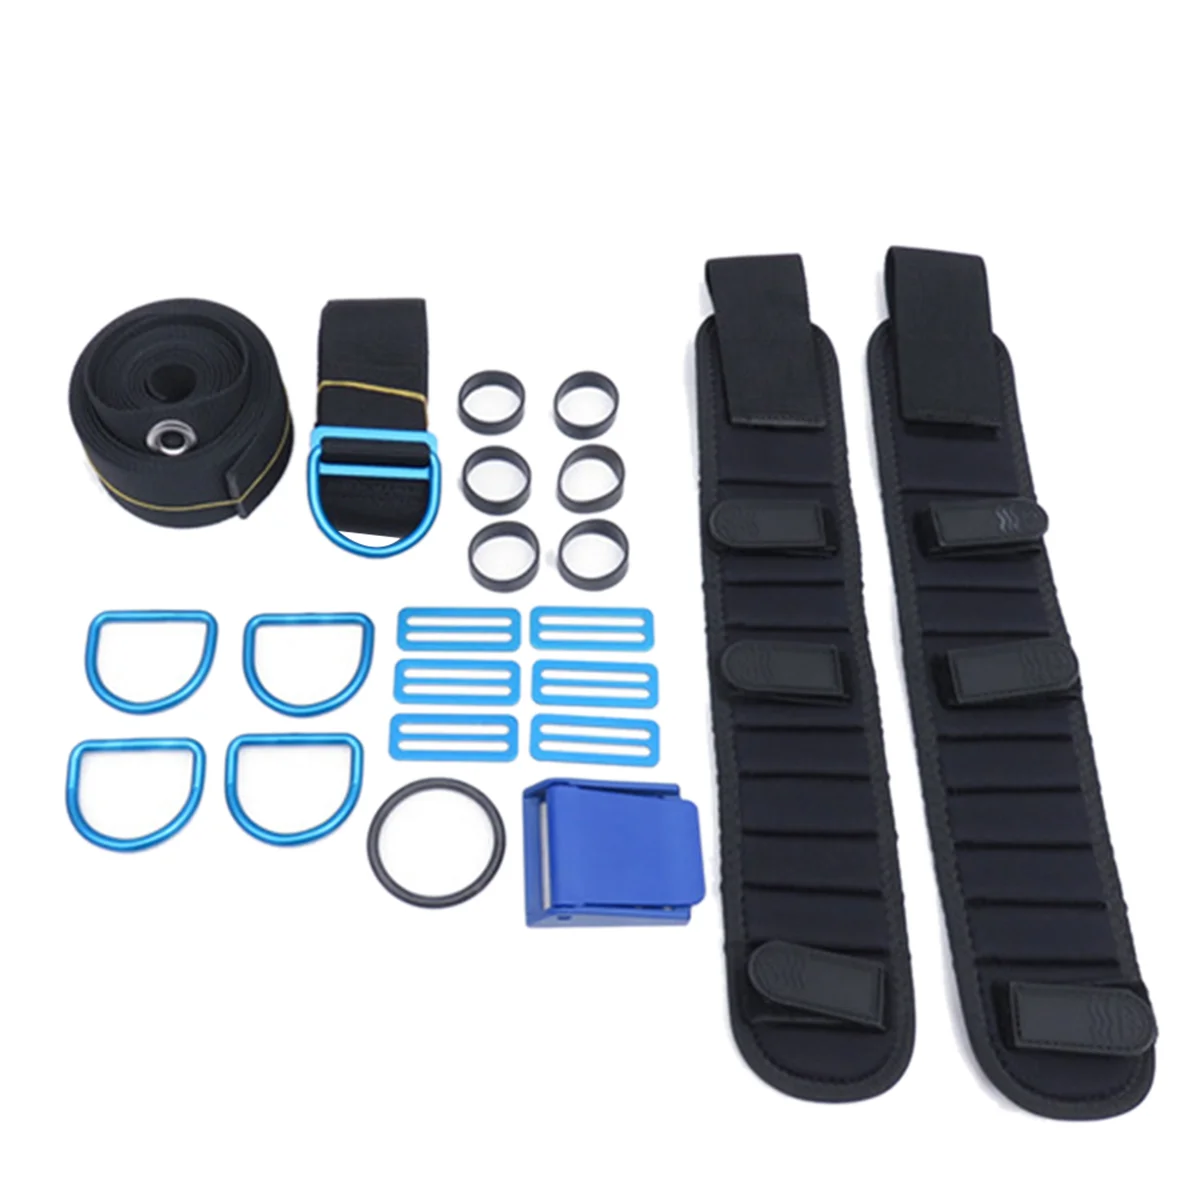 scuba-diving-backplate-dir-harness-bcd-holder-crotch-strap-set-weight-belt-dive-accessories-black-blue